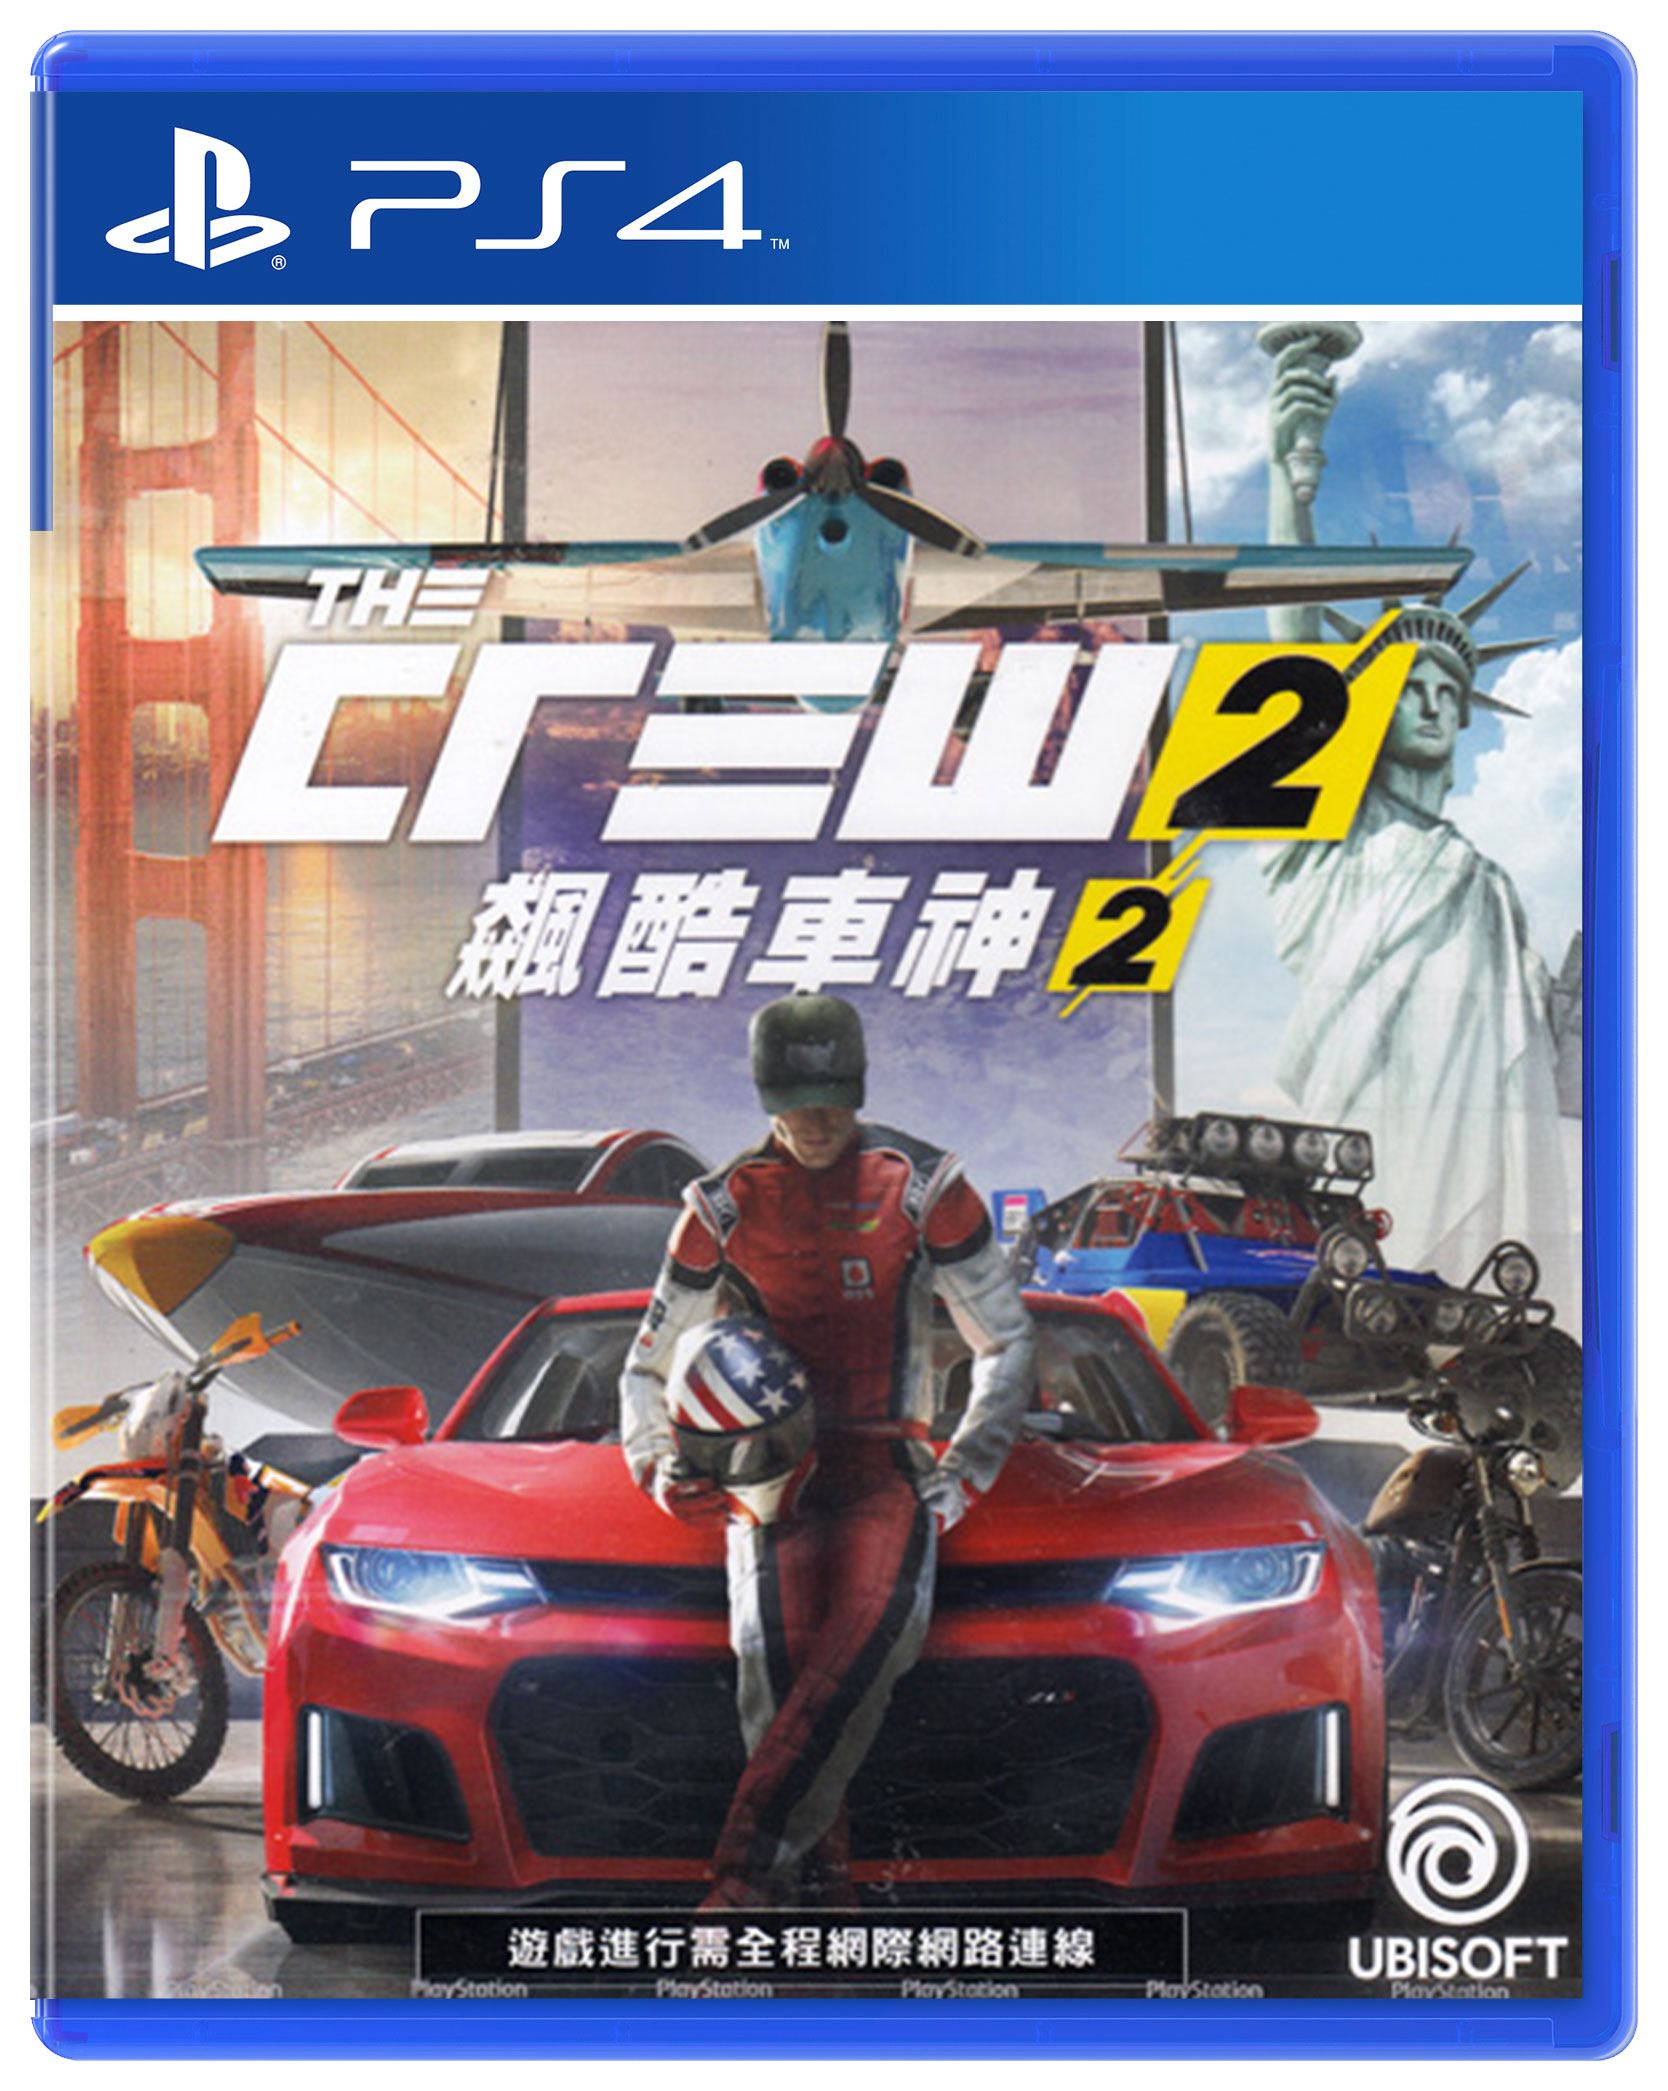 Seaport grammatik Ryg, ryg, ryg del The Crew 2 (Chinese & English Subs) for PlayStation 4